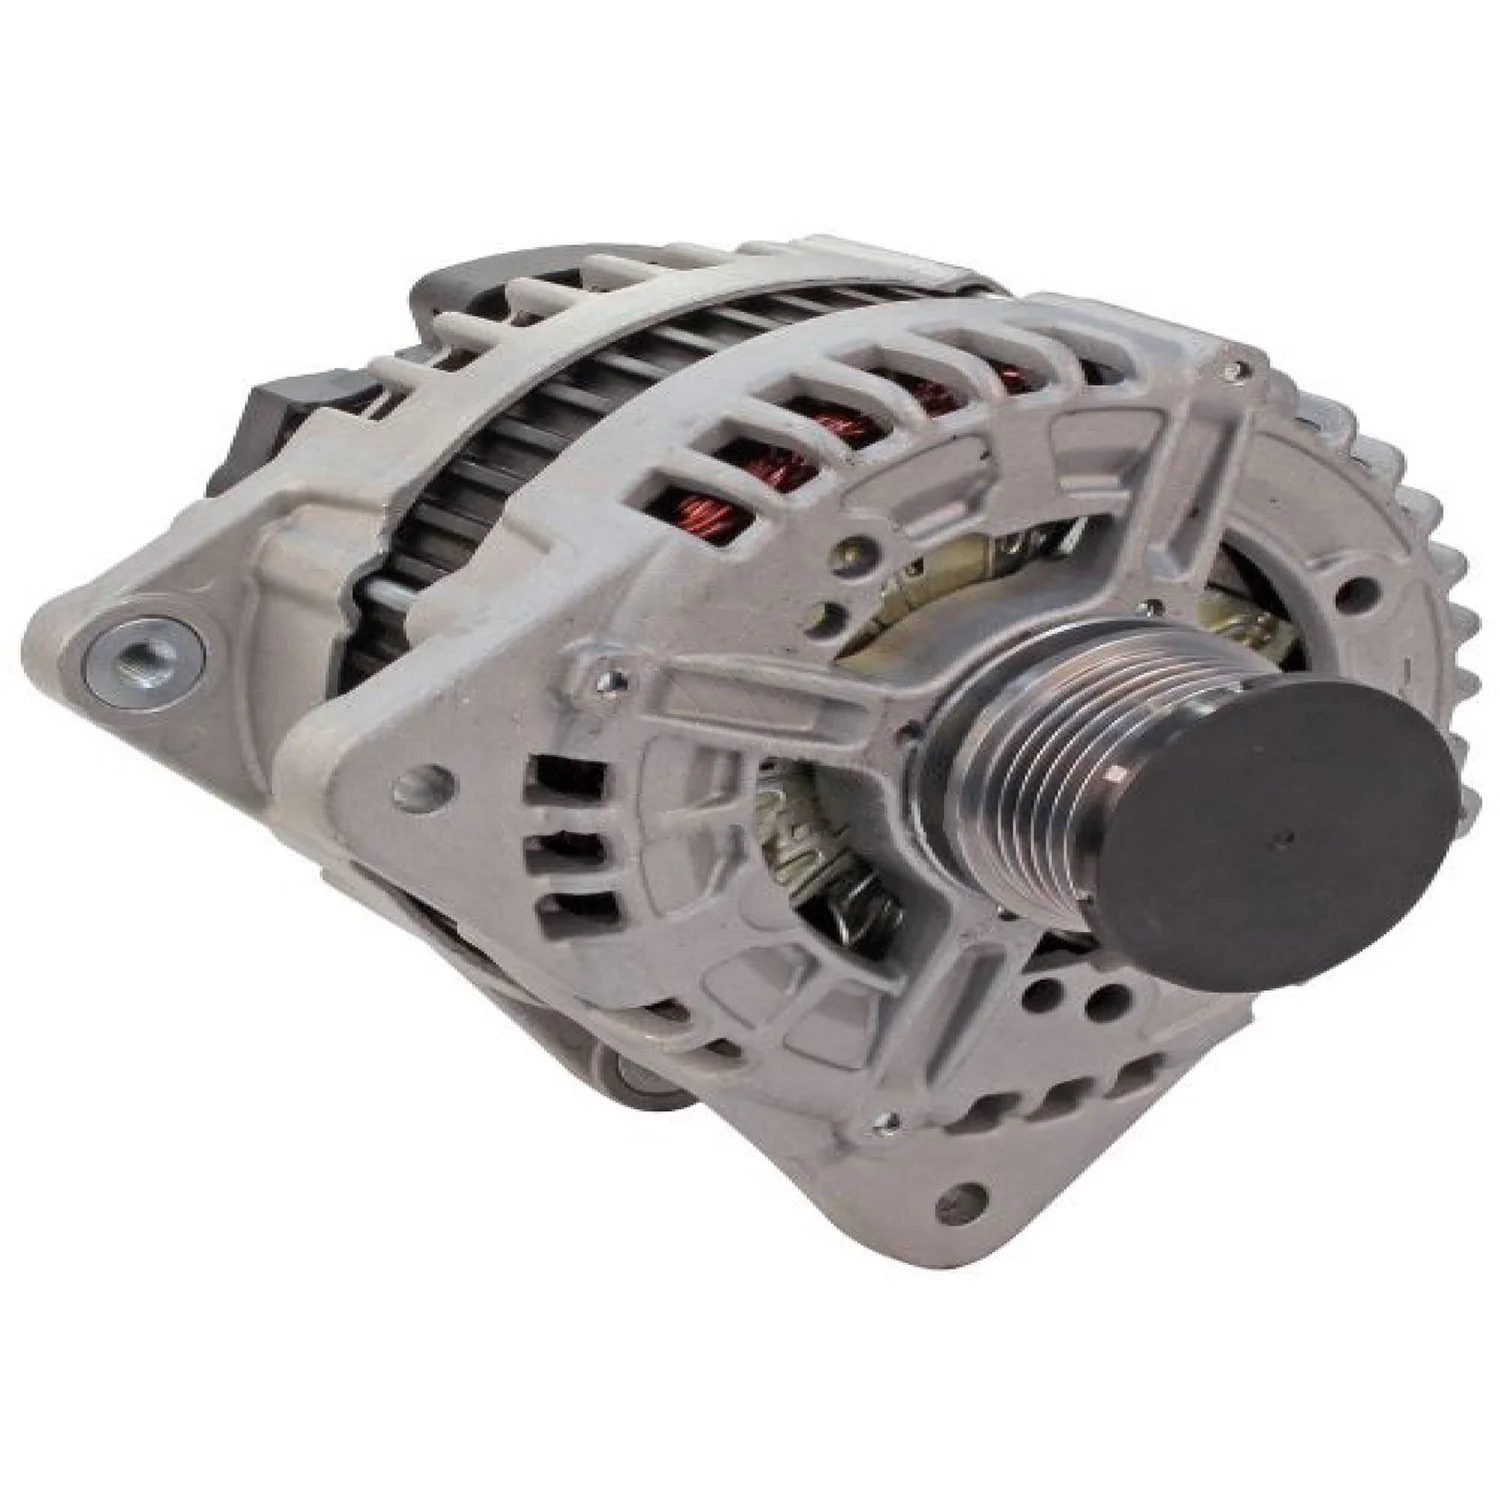 

Auto Dynamo Alternator Generator For BSH Delco Lucas Mercedbenz VLEO 0121715077 0121715177 0125811008 0125811035 0125811115